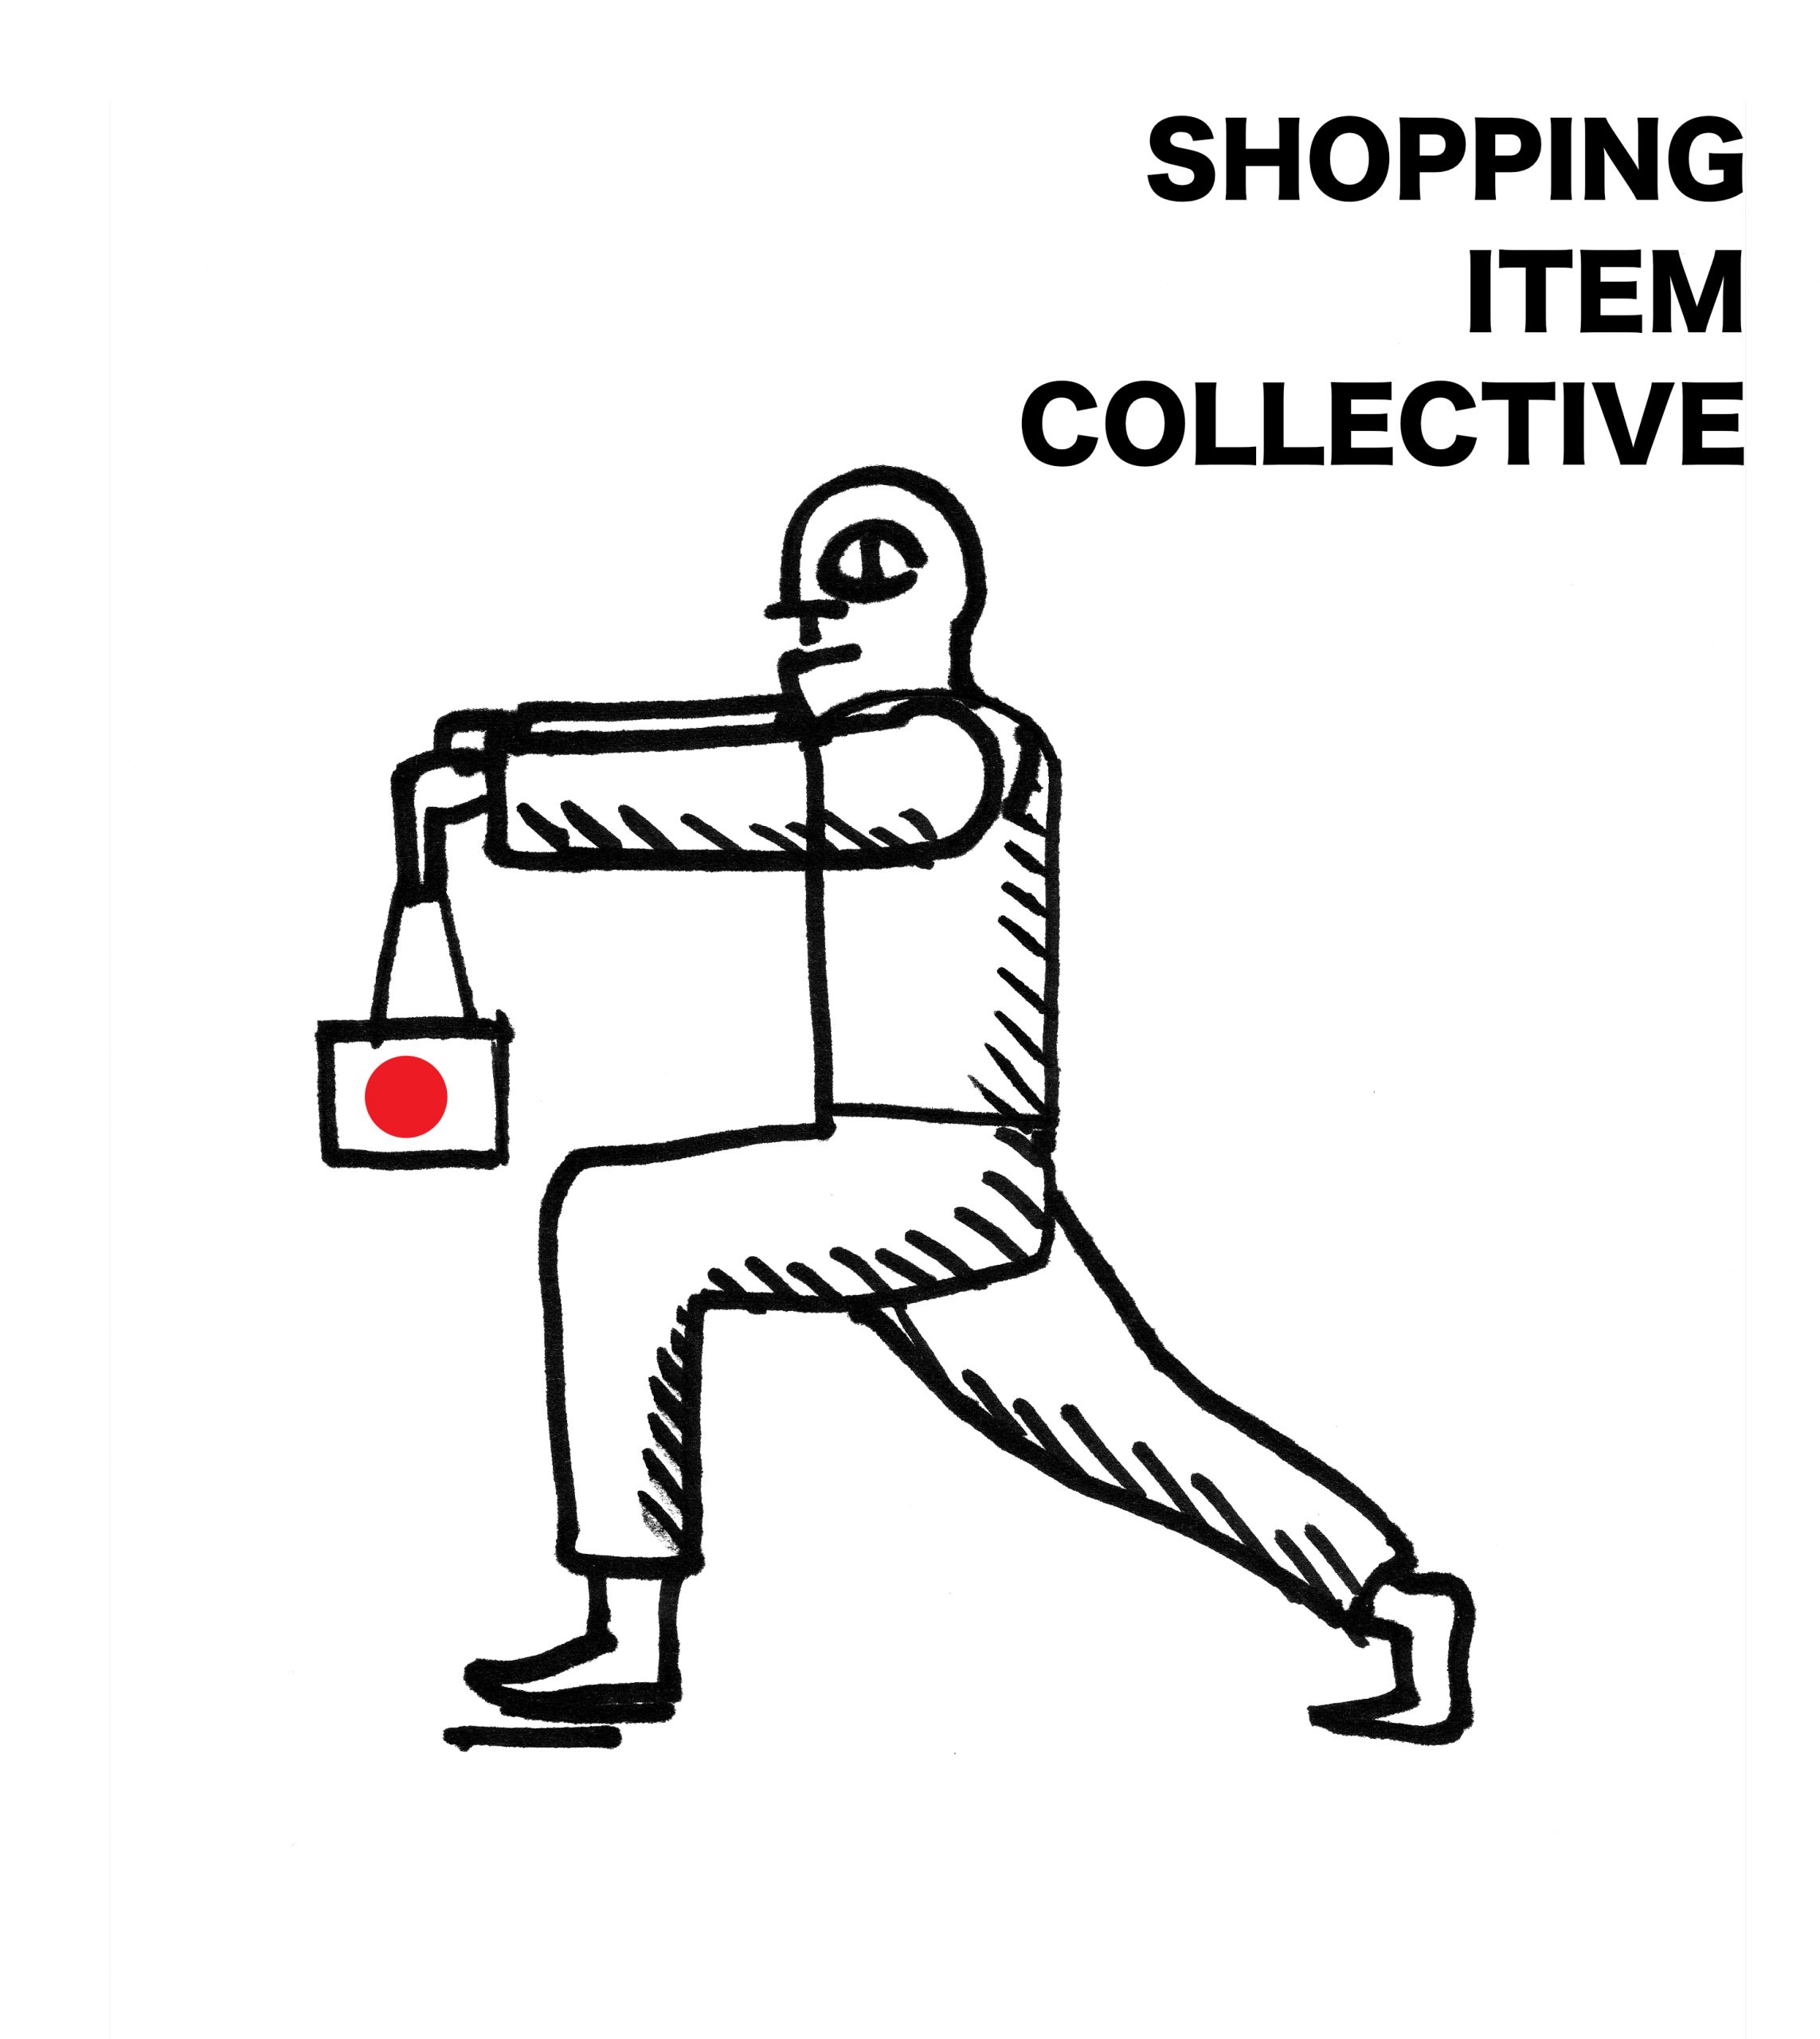 Shopping item collective logo